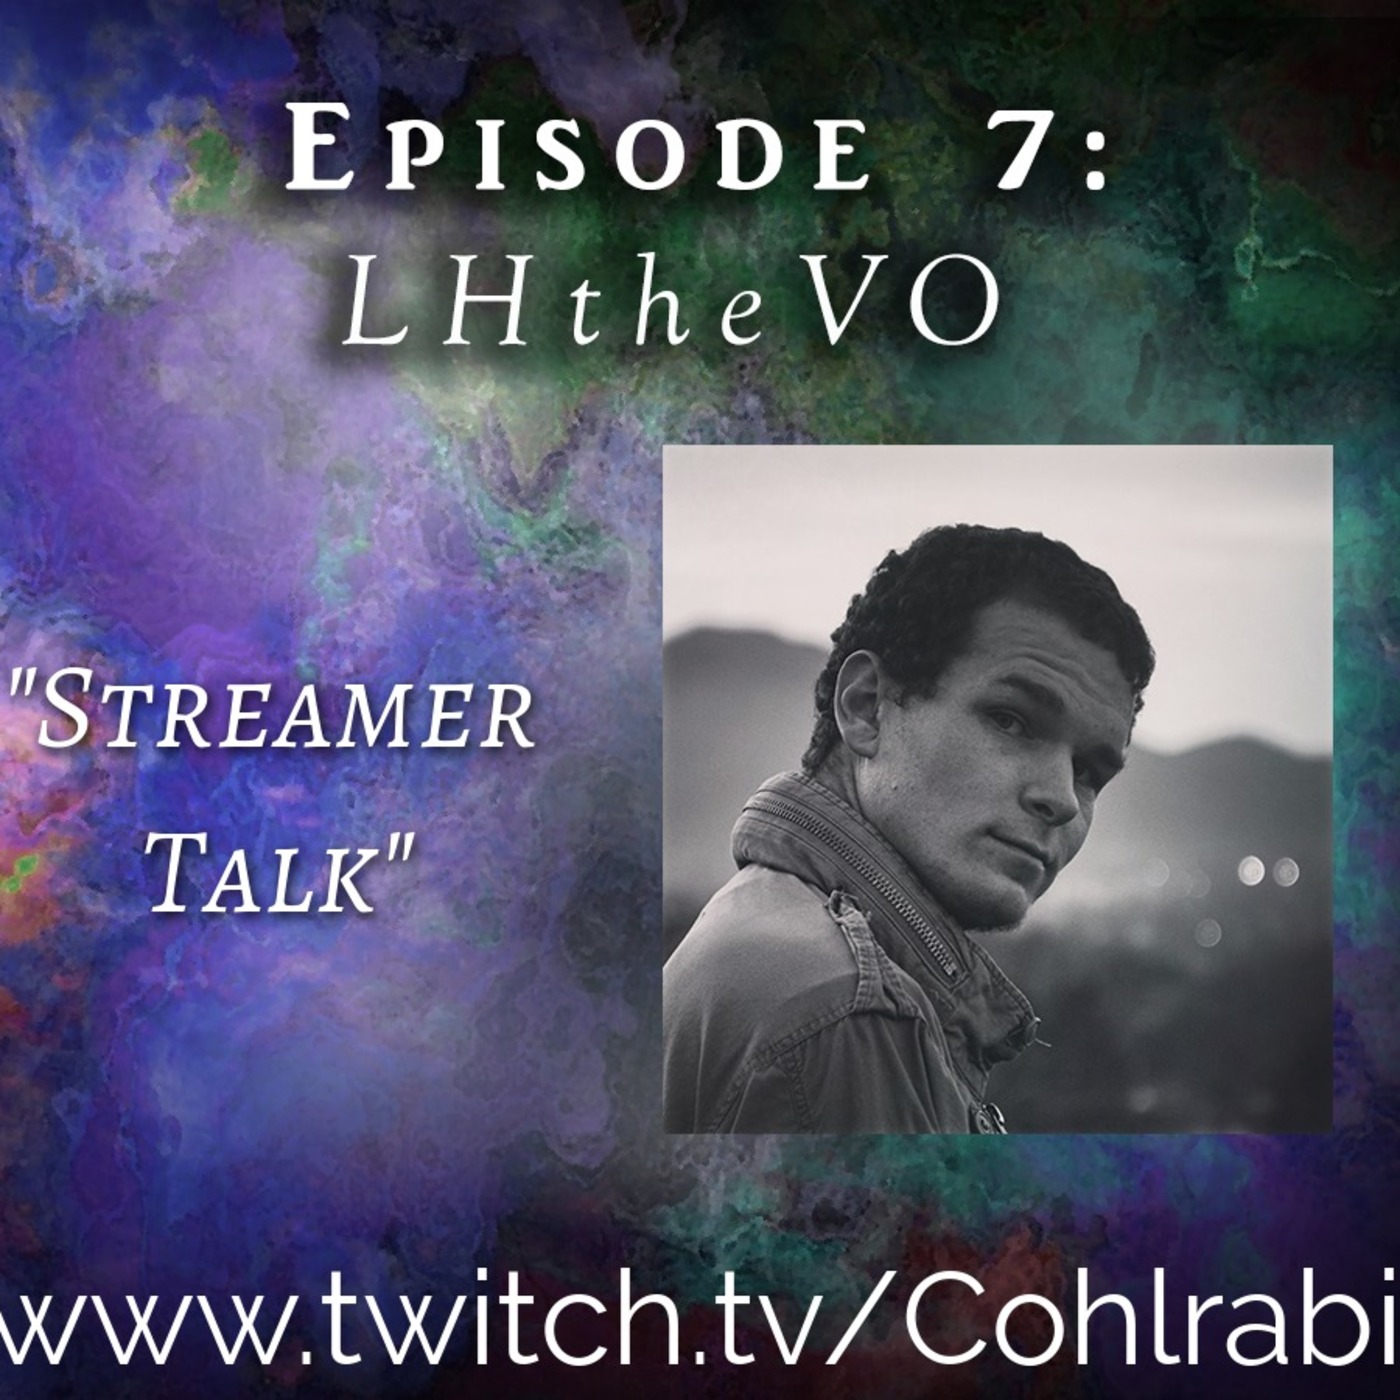 Episode 7: Streamer Talk w/ LHtheVO !